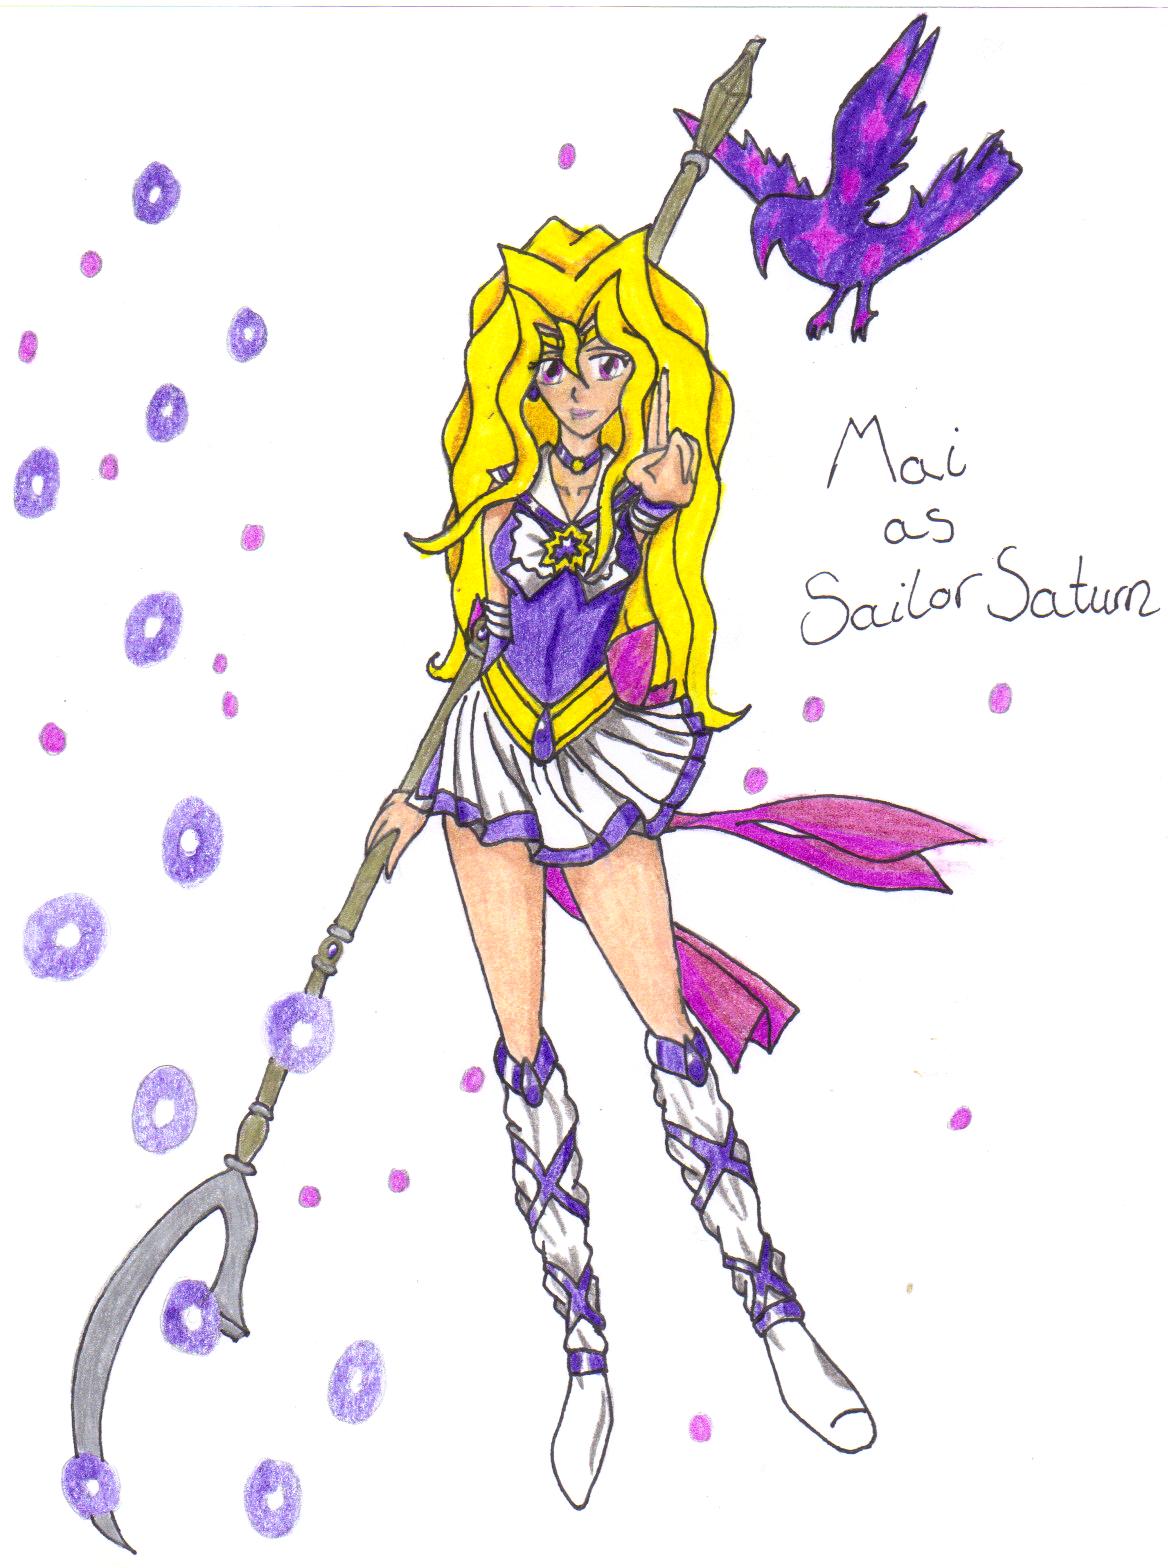 Mai as Sailor Saturn by setoXyamiKaiba4ever